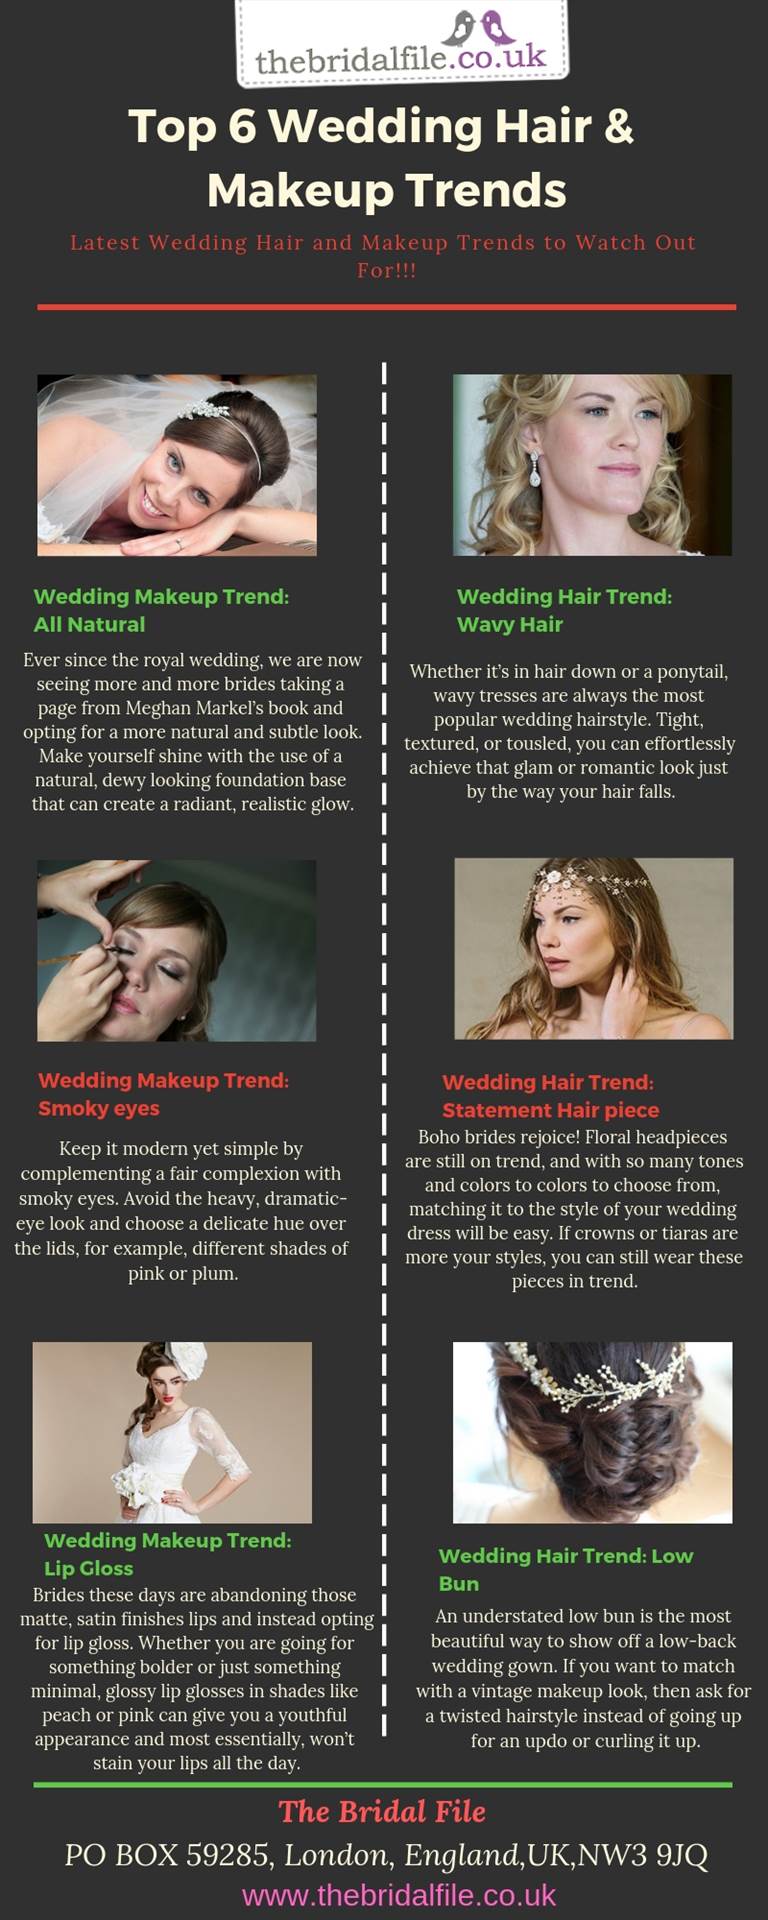 Top 6 Wedding Hair & Makeup Trends.jpg  by thebridalfile